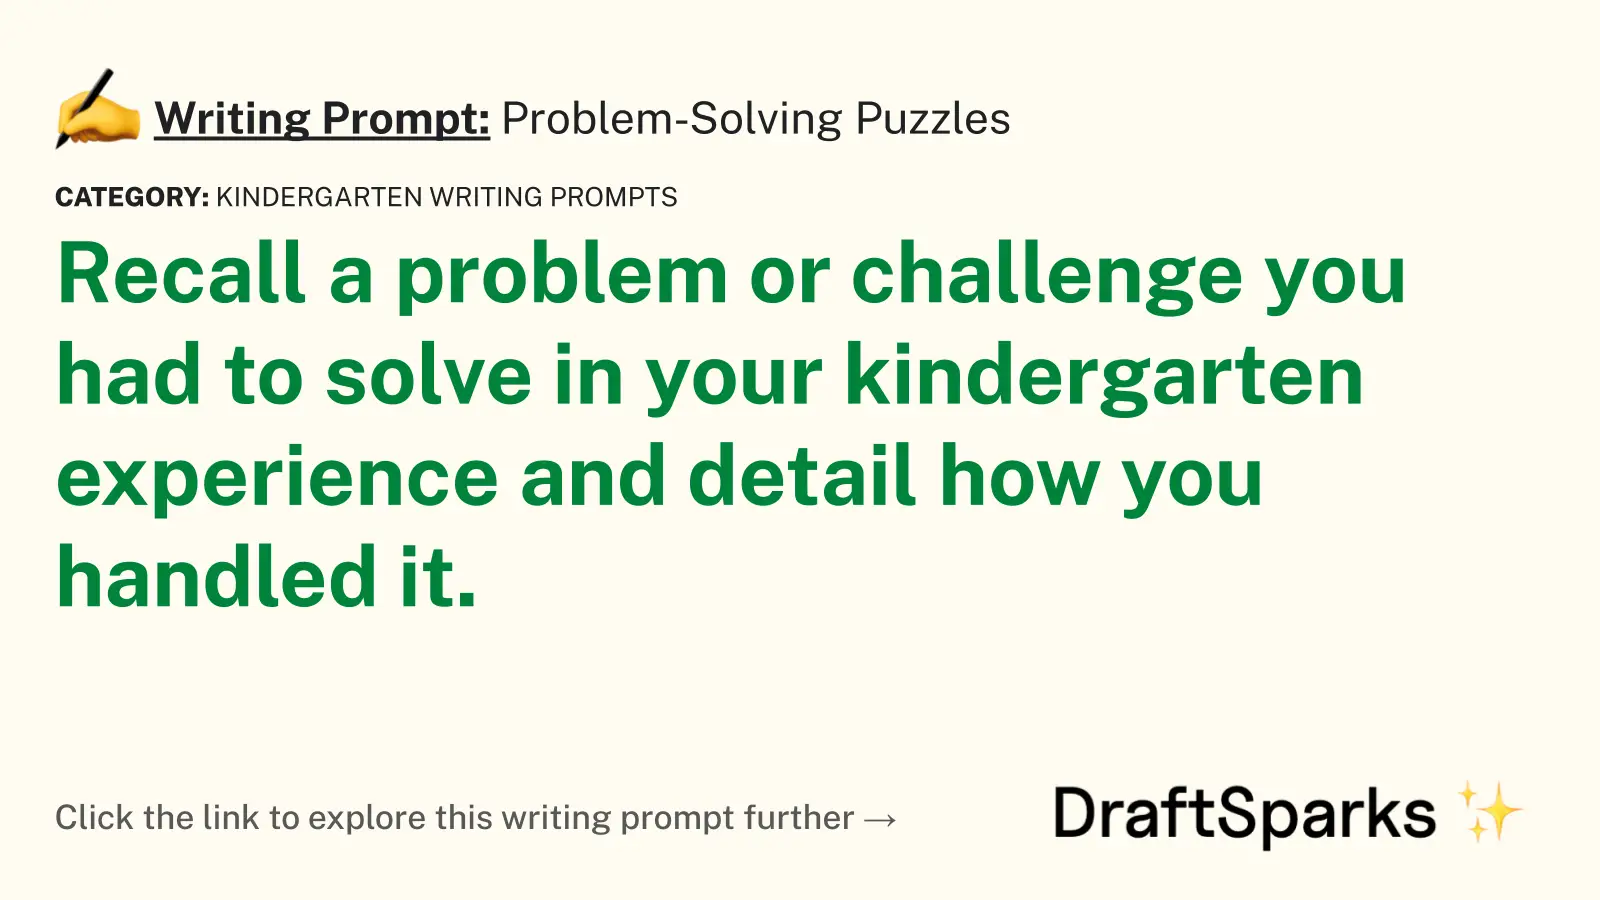 Problem-Solving Puzzles